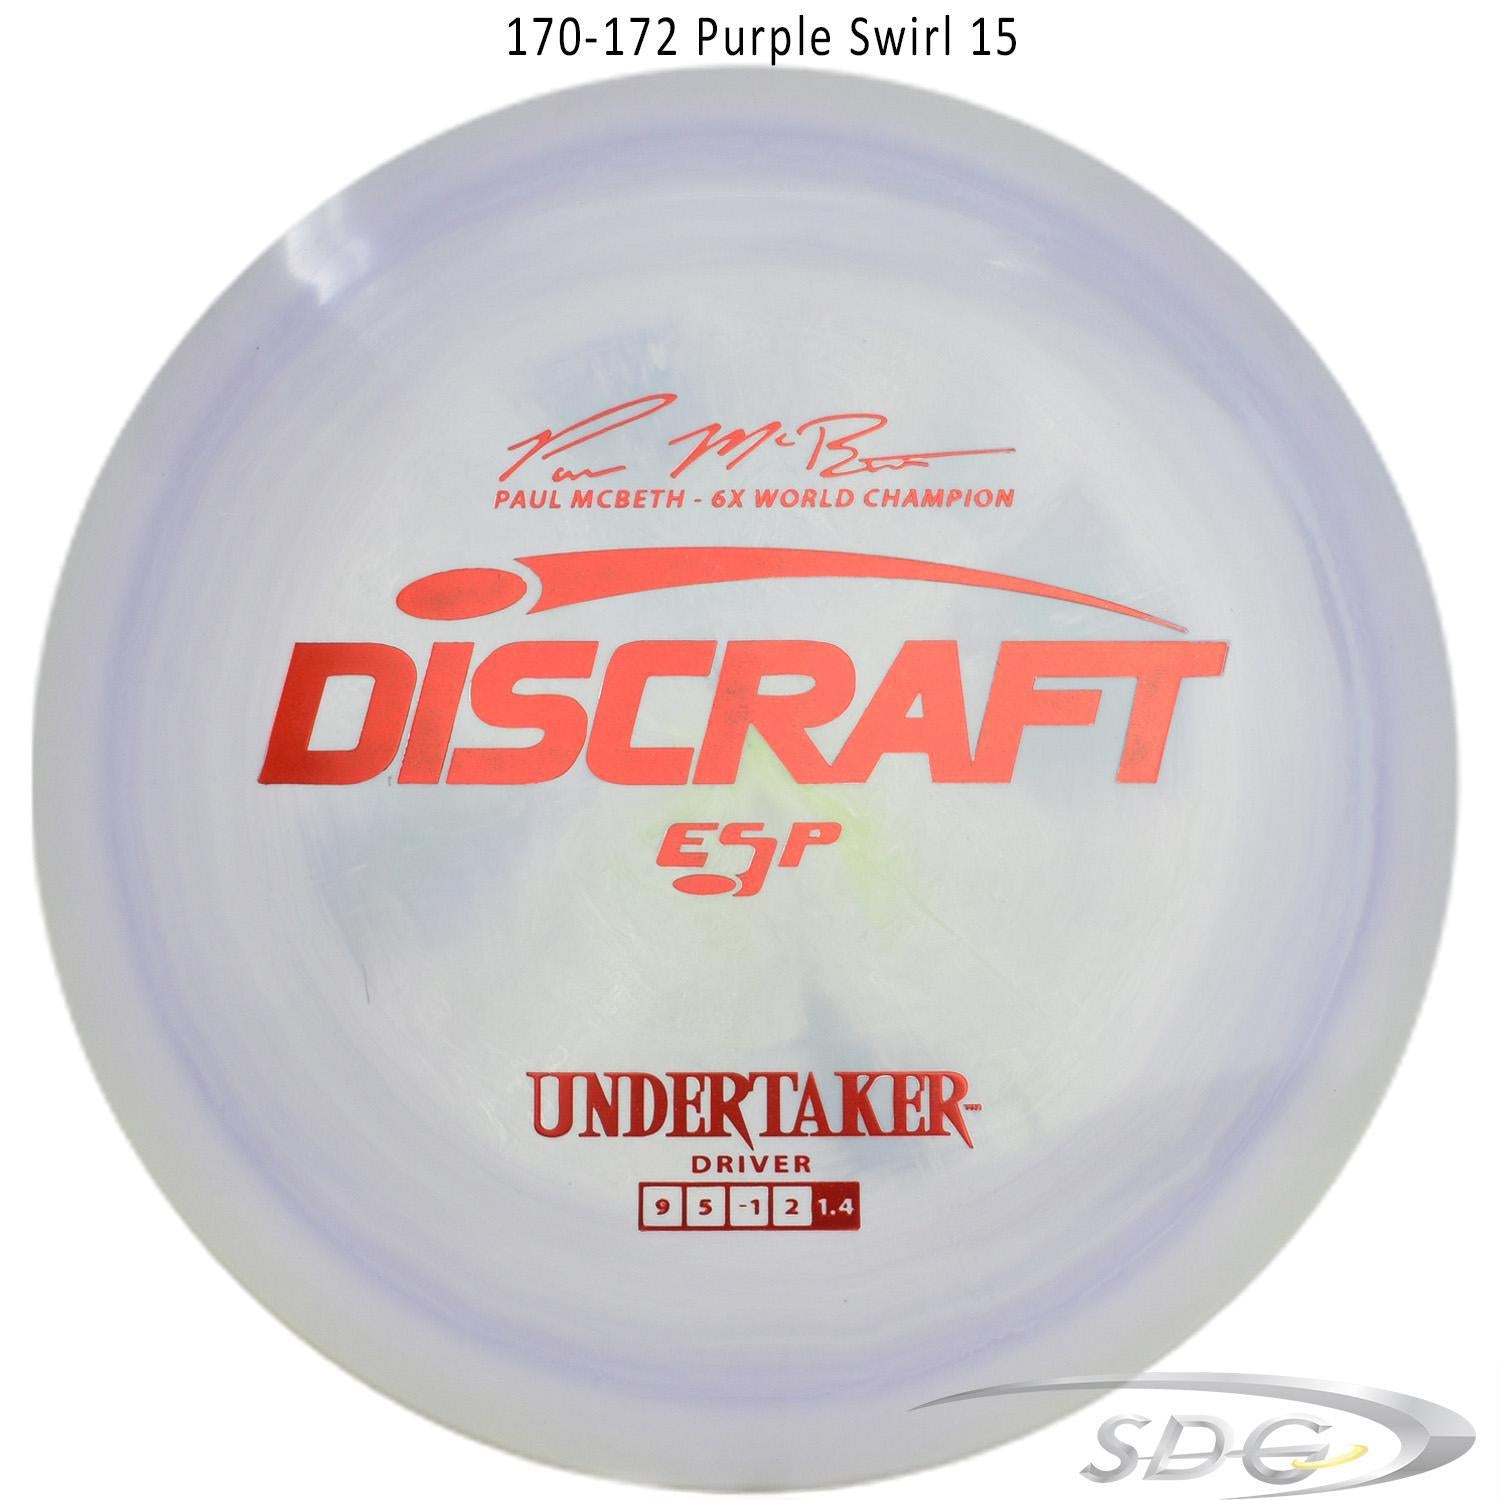 discraft-esp-undertaker-6x-paul-mcbeth-signature-series-disc-golf-distance-driver-172-170-weights 170-172 Purple Swirl 15 